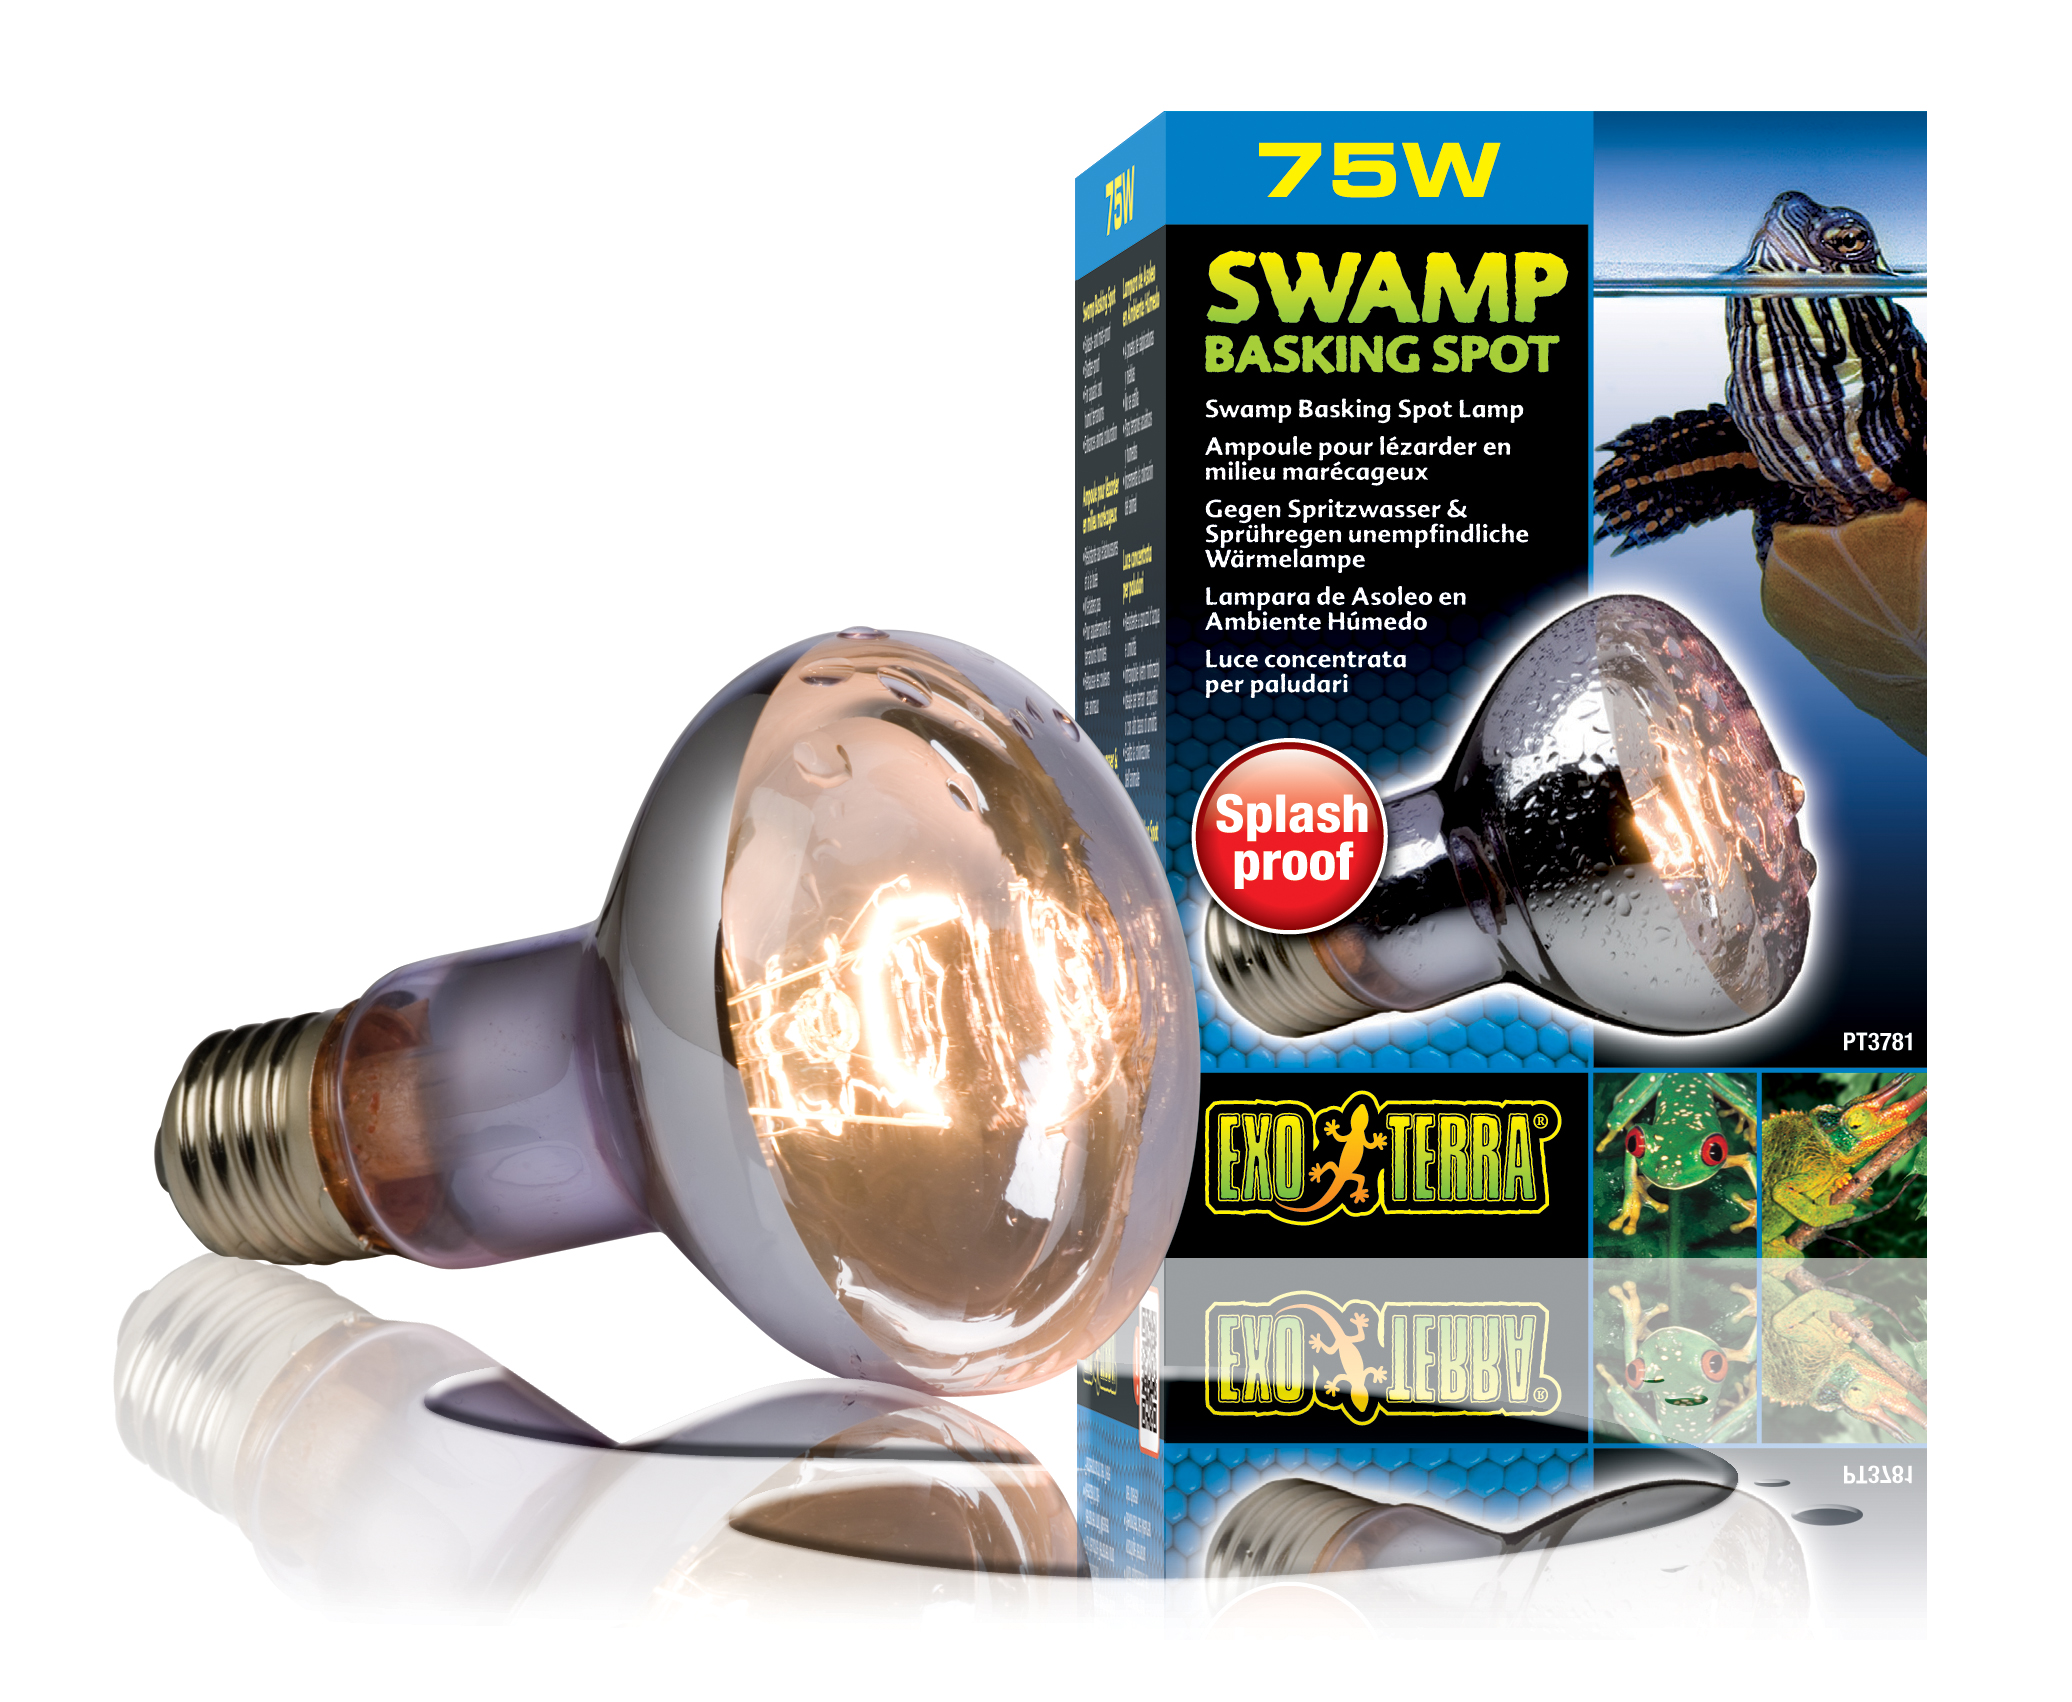 Ex swamp basking spot bulb - <Product shot>